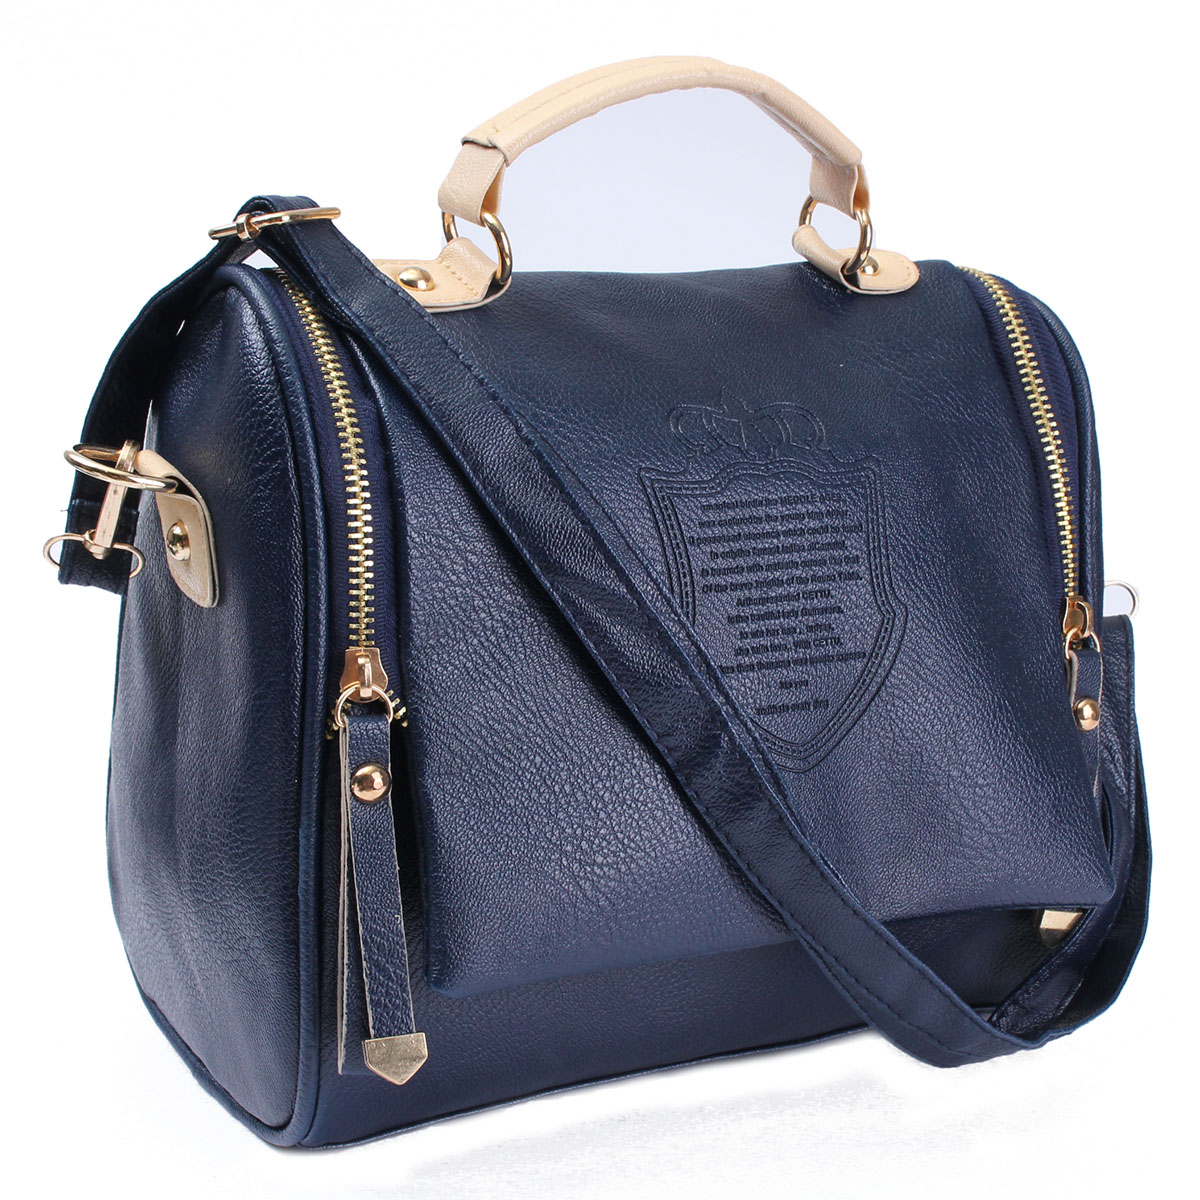 Women Lady Leather Handbag Shoulder Bag Tote Purse Messenger Satchel Crossbody | eBay